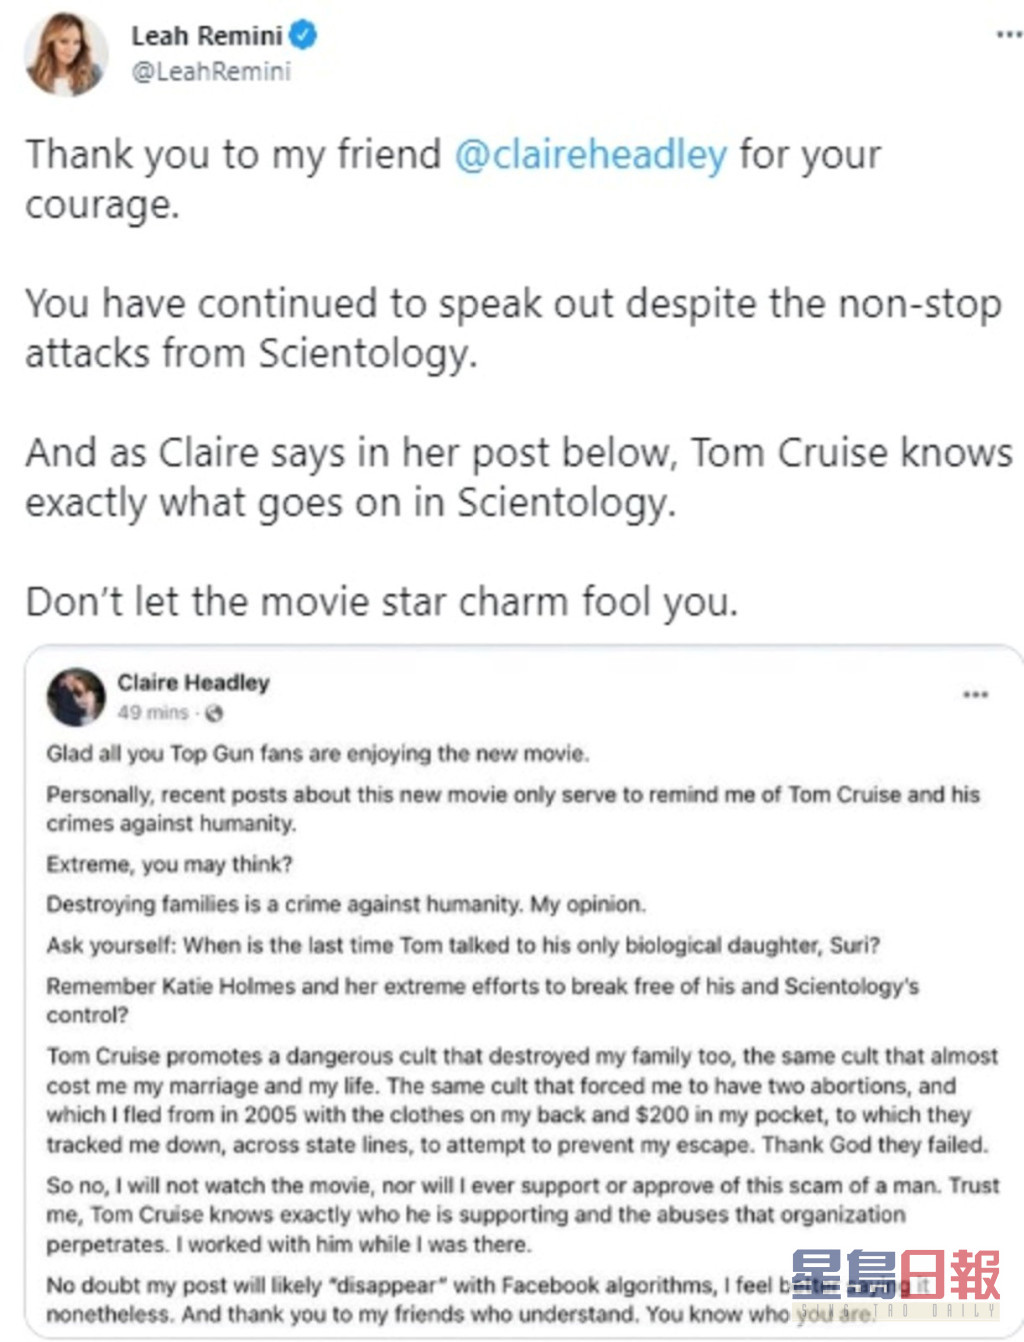 Leah轉貼前科學教派信徒Claire Headley的社交網帖文，指摘湯告魯斯宣揚邪教。